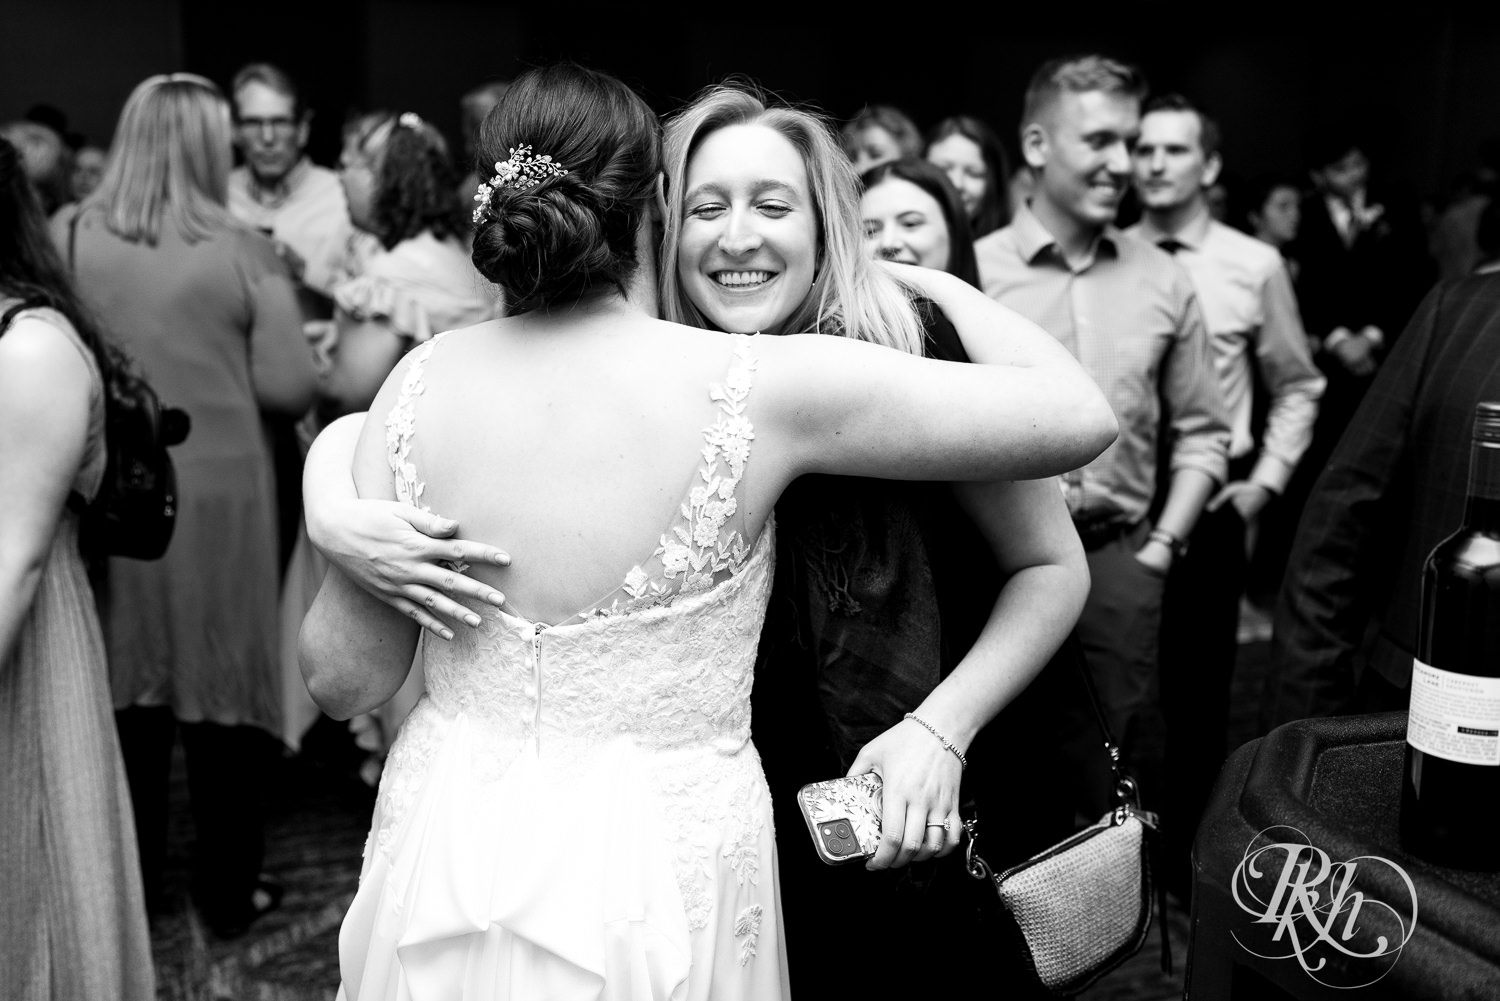 Guest hugs bride at wedding reception at Doubletree Hilton Saint Paul in Saint Paul, Minnesota.